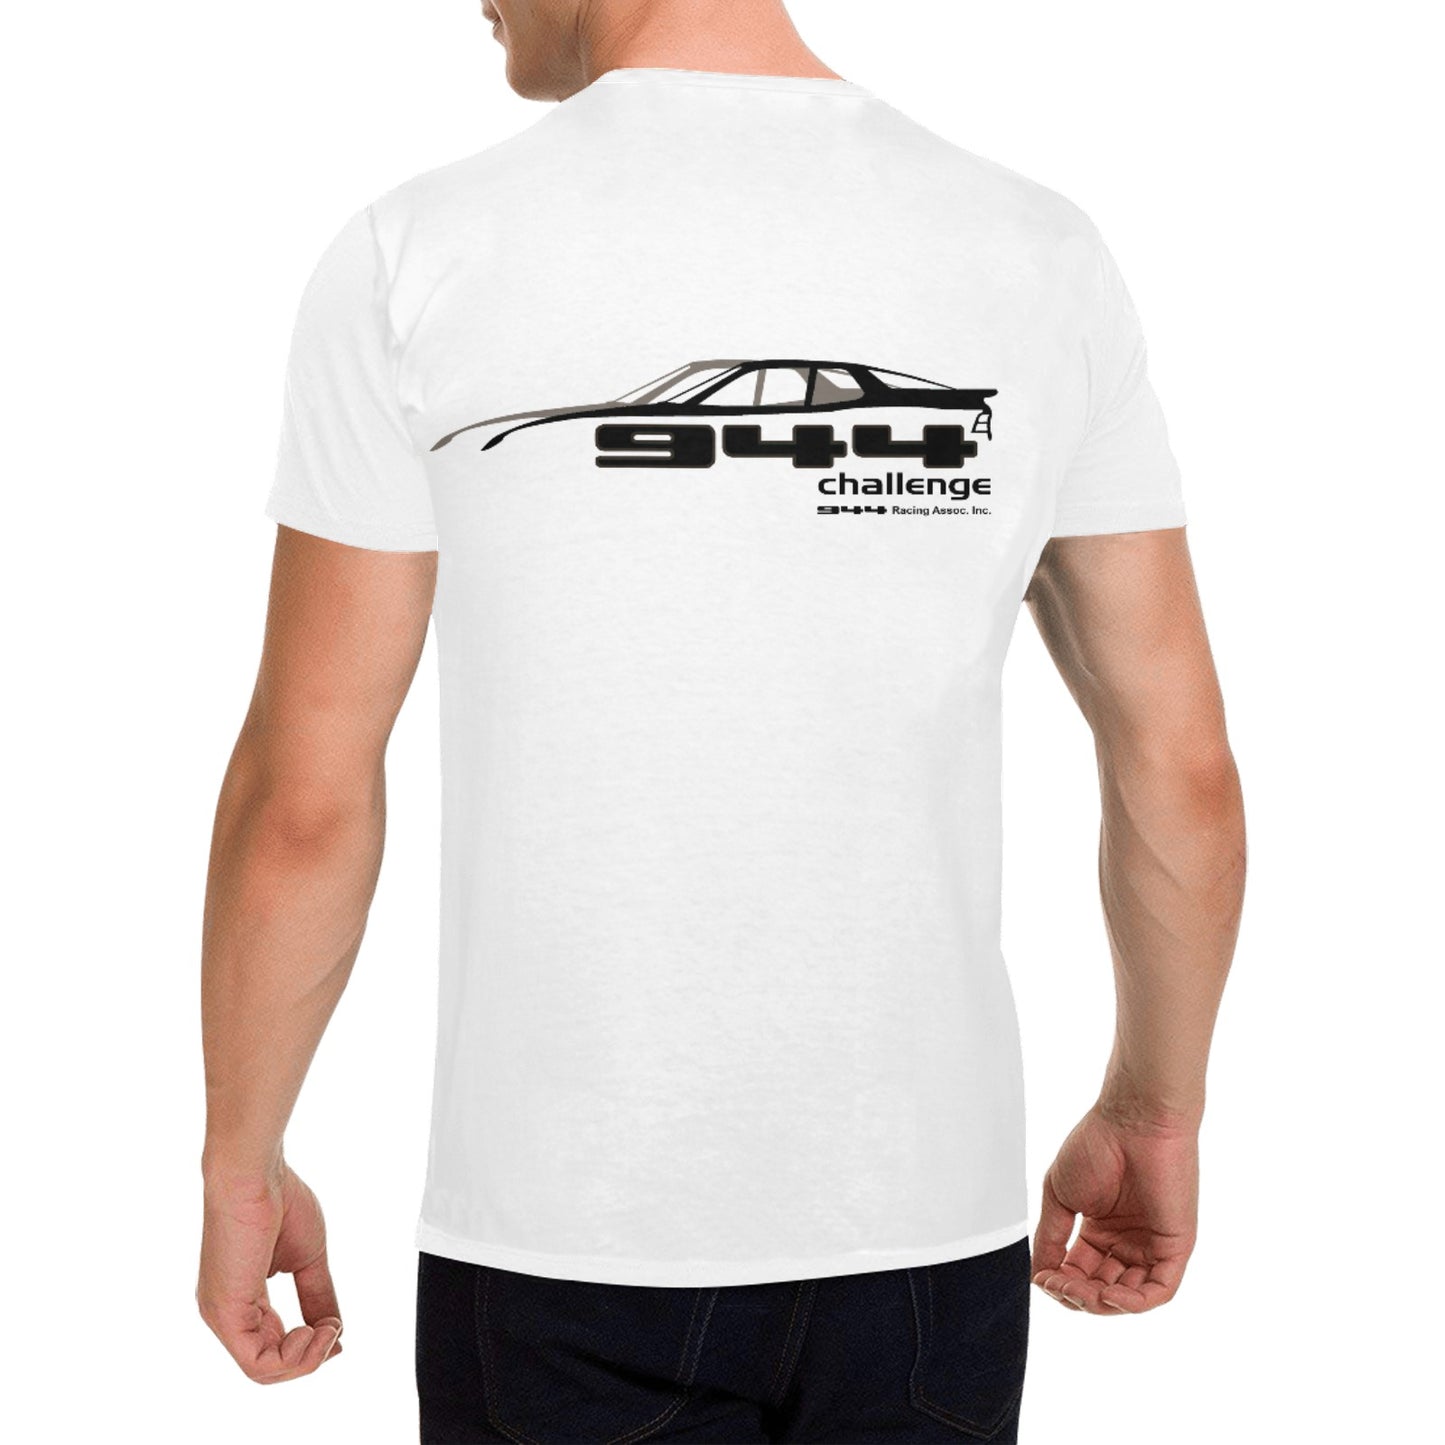 944 CHALLENGE 100% cotton 944 cutaway T-shirt -  circuit white